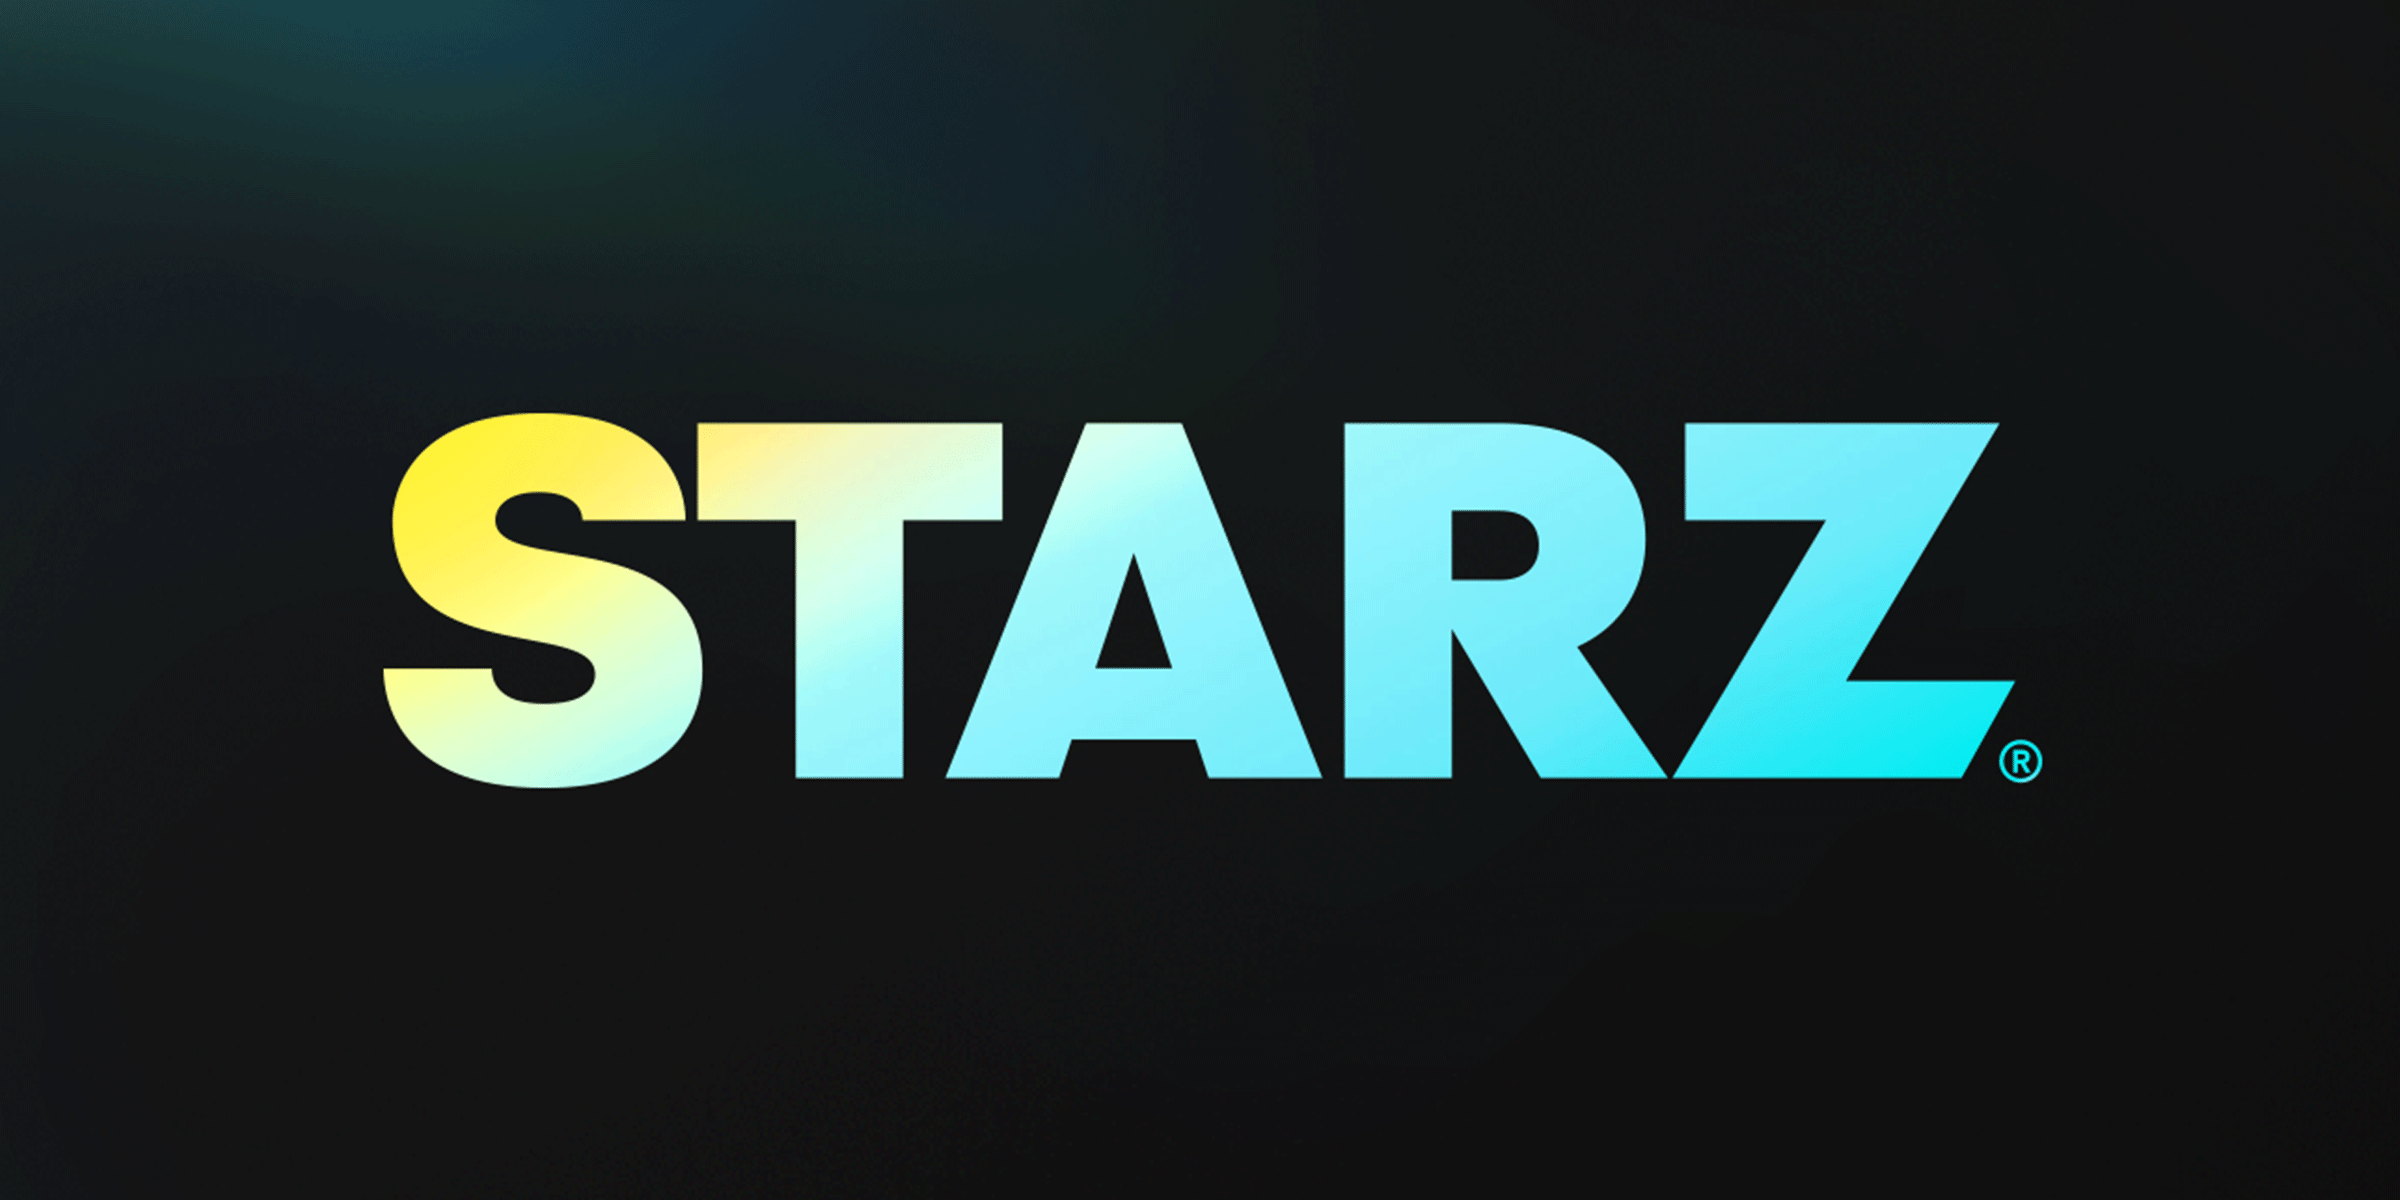 STARZ logo